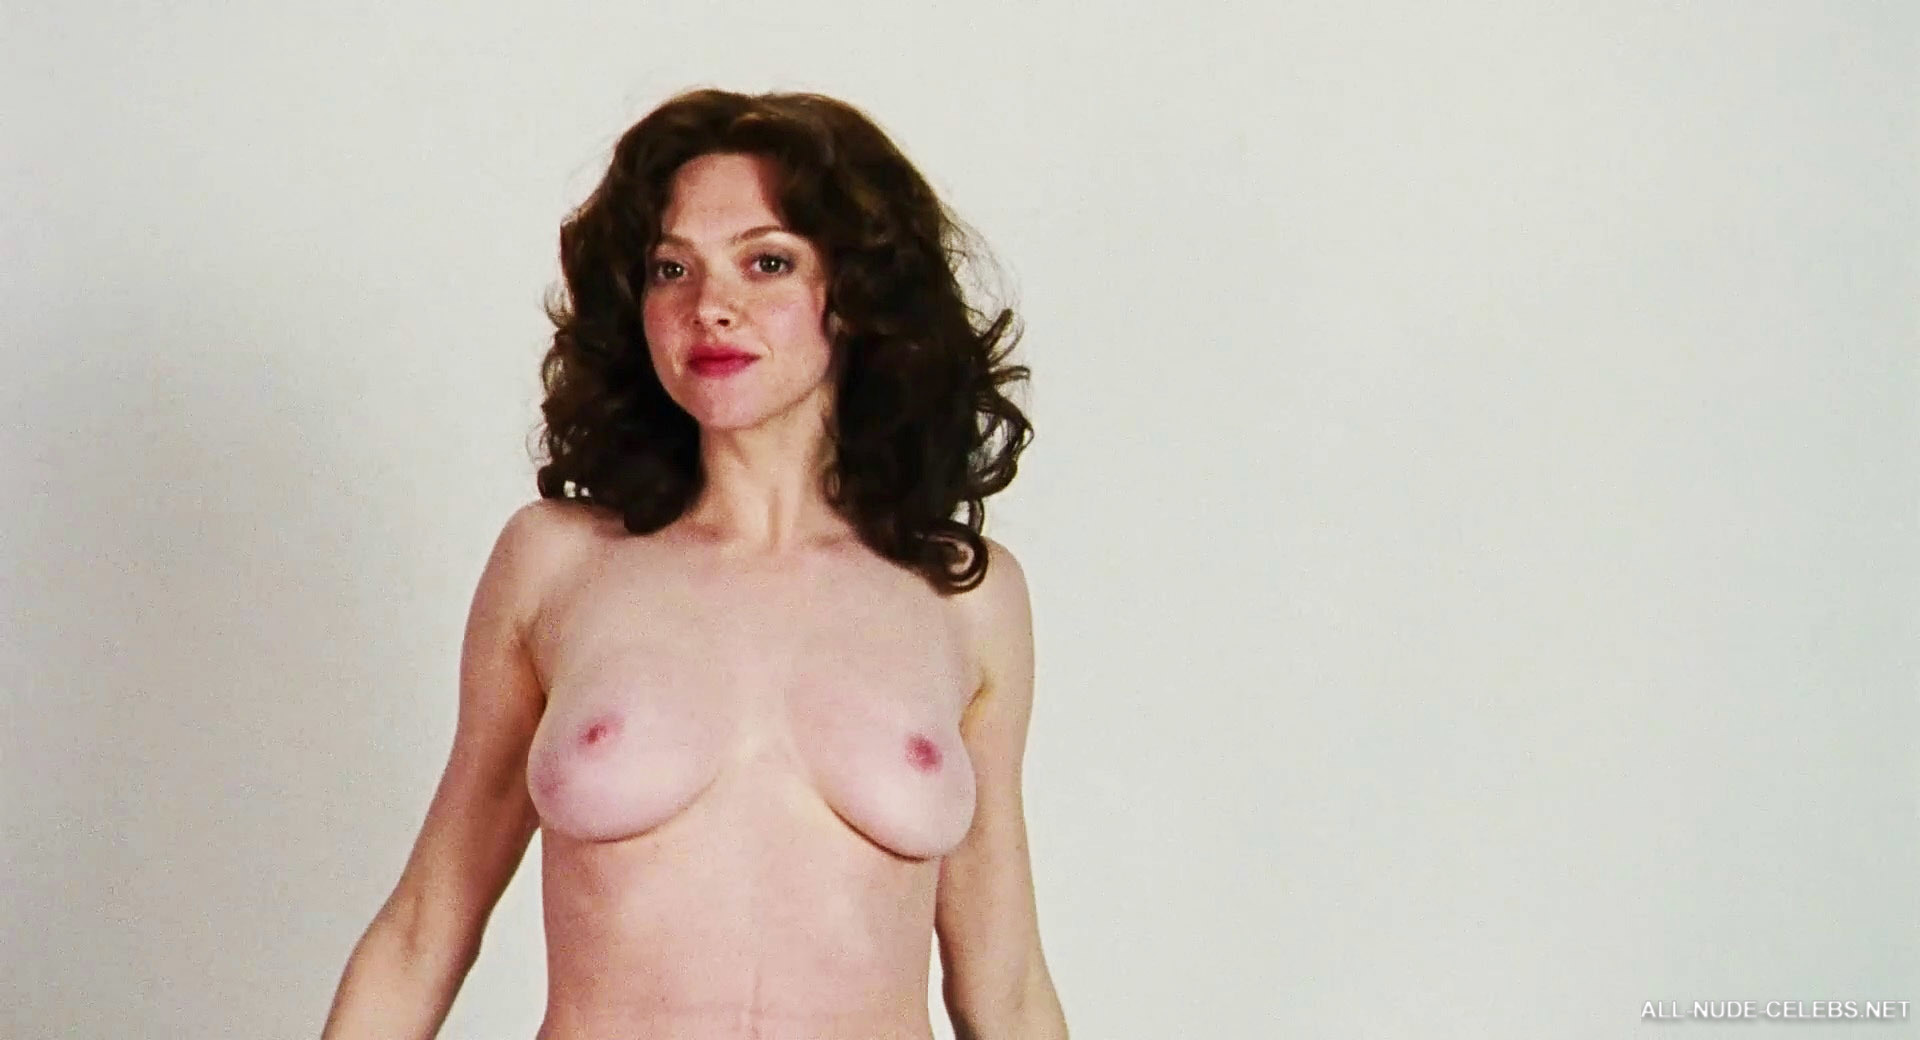 Amanda Seyfried nude movie scenes.